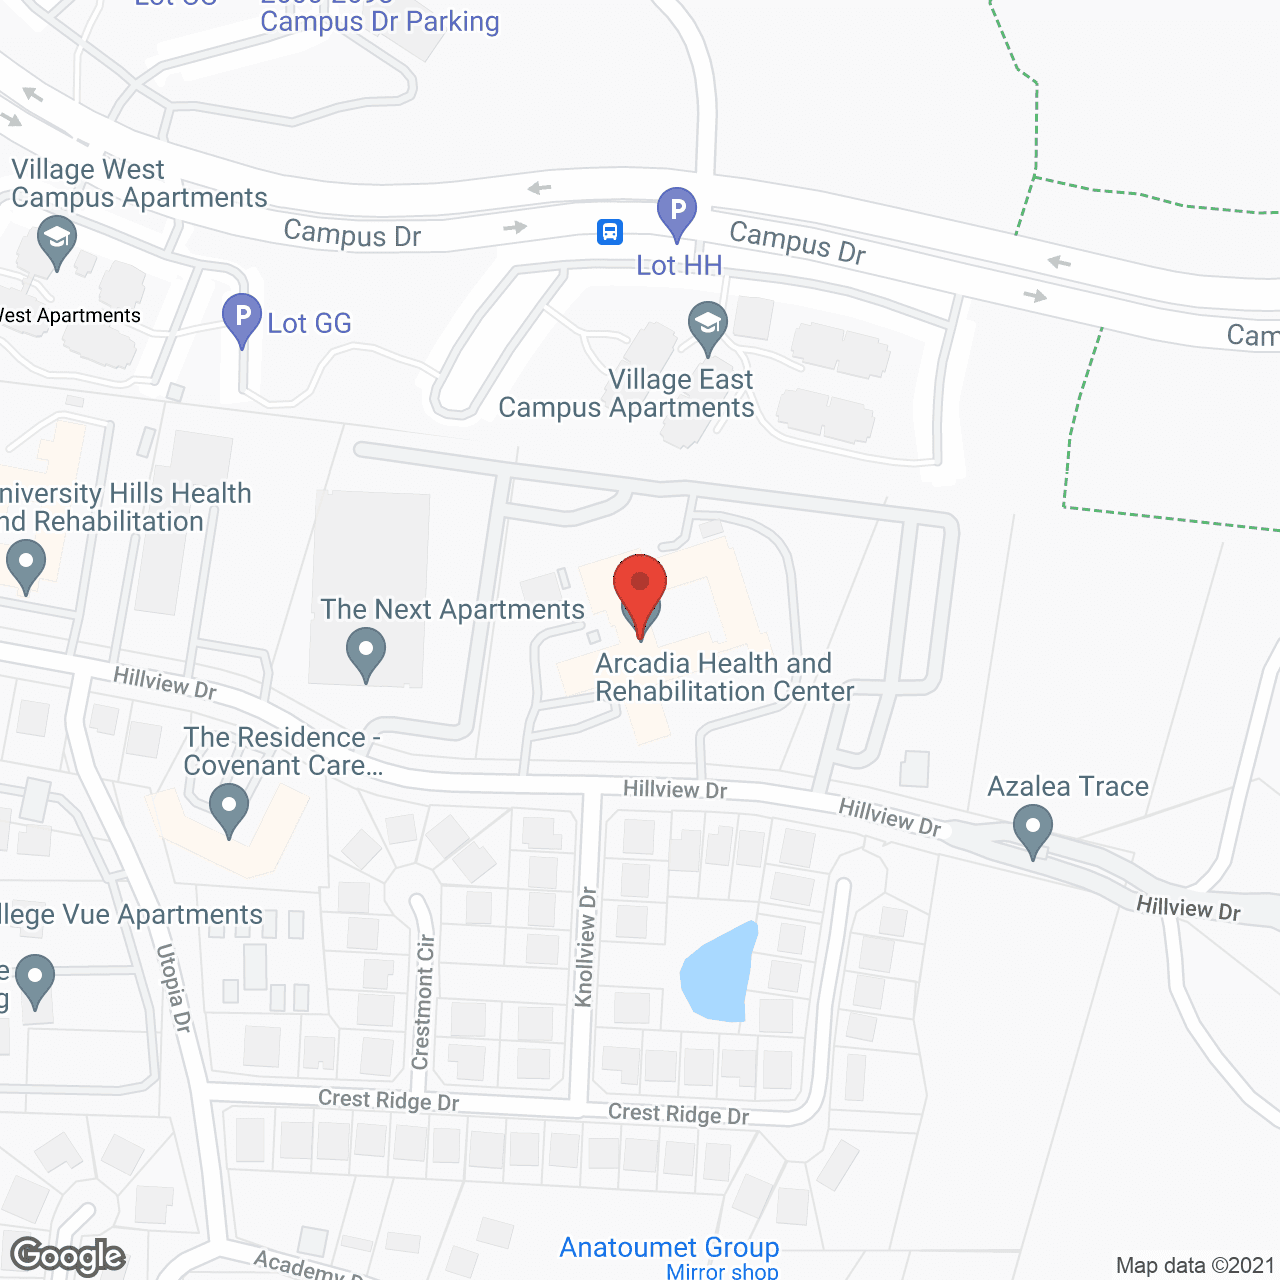 Arcadia Health And Rehabilitation Center in google map